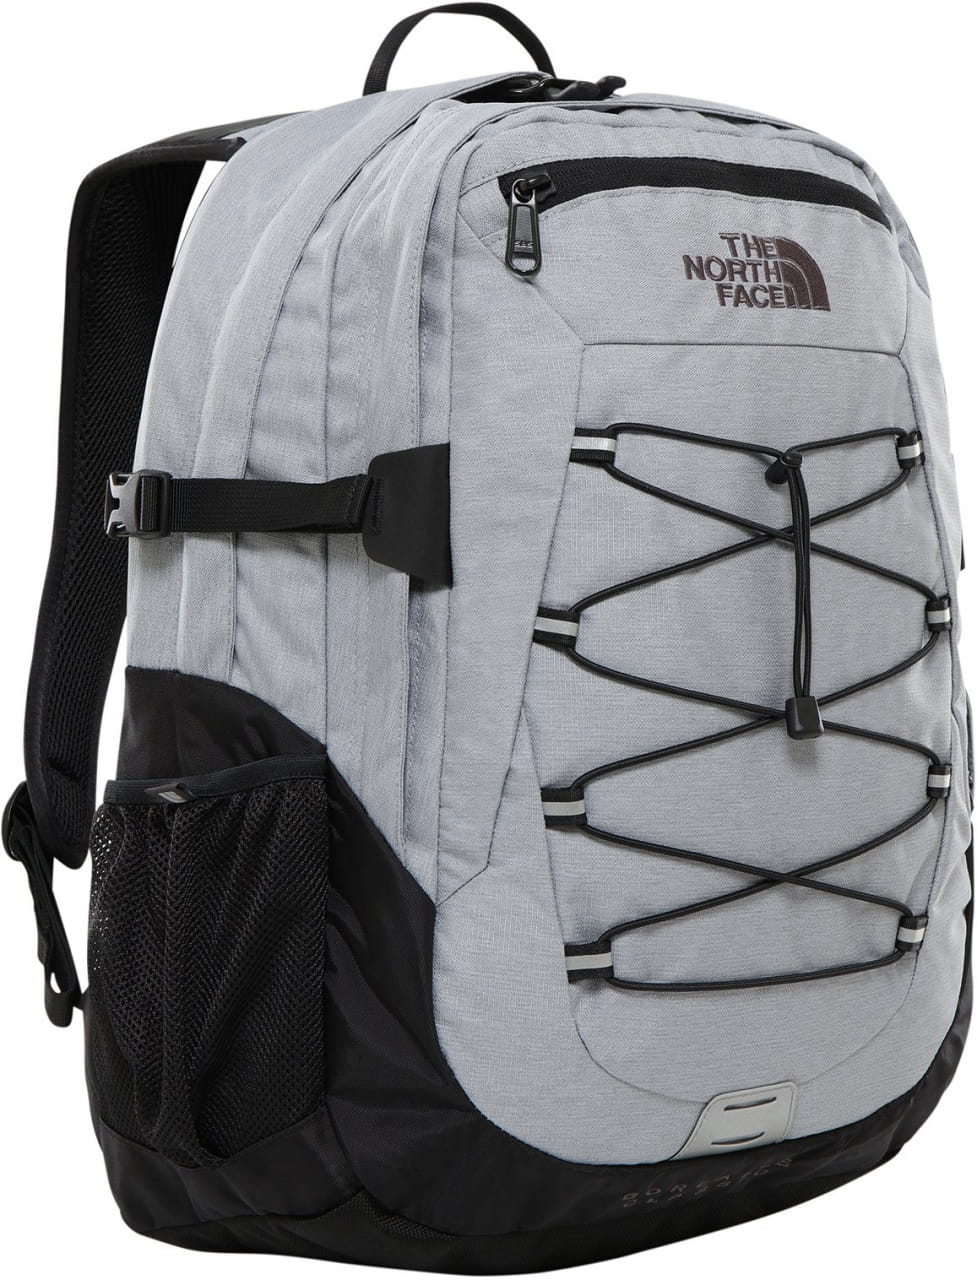 Torby i plecaki The North Face Borealis Classic Backpack